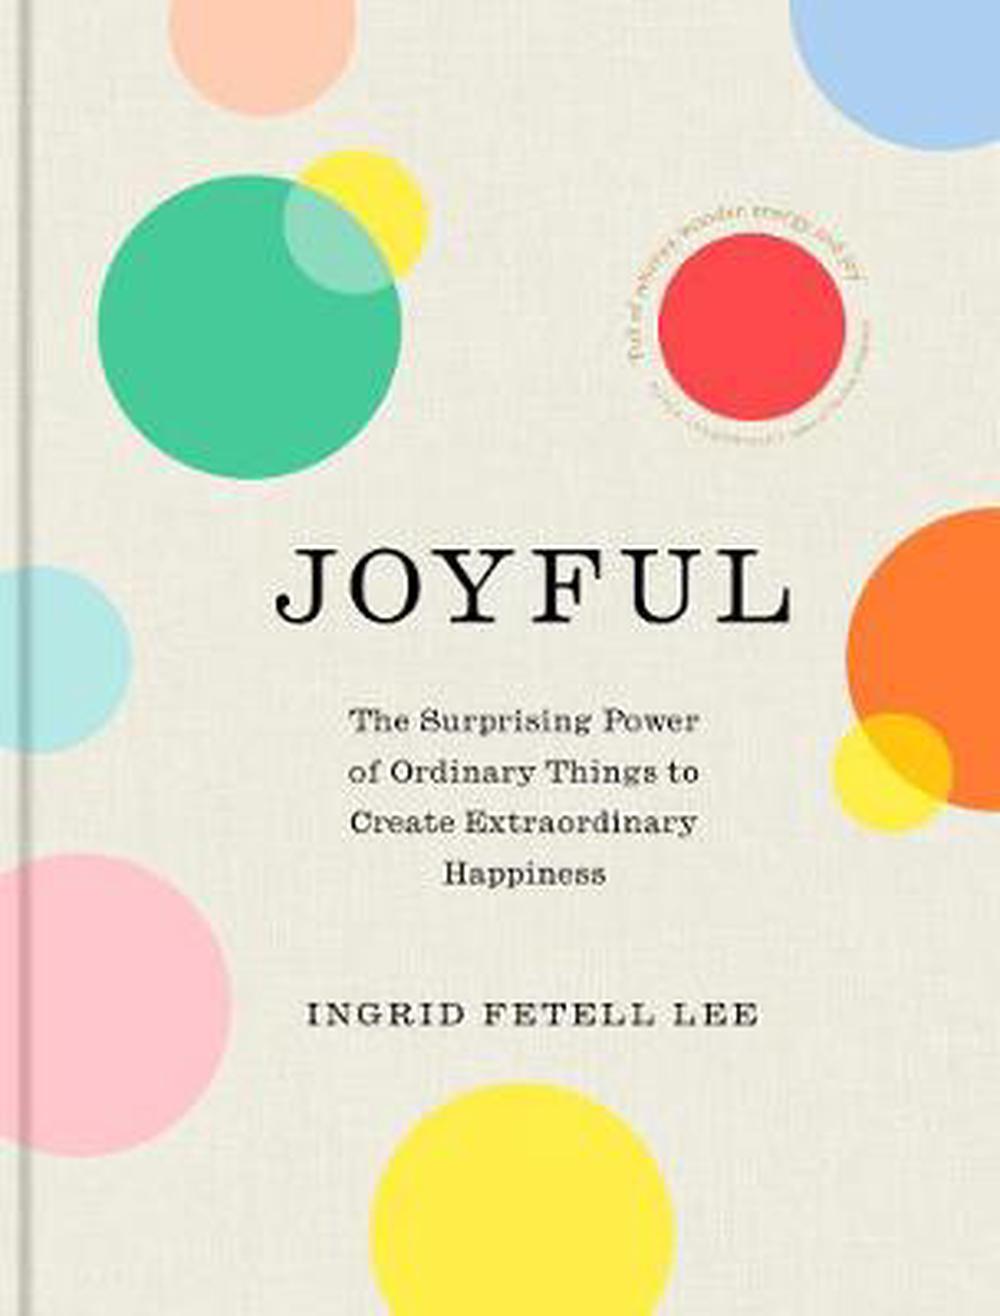 joyful ingrid fetell lee review